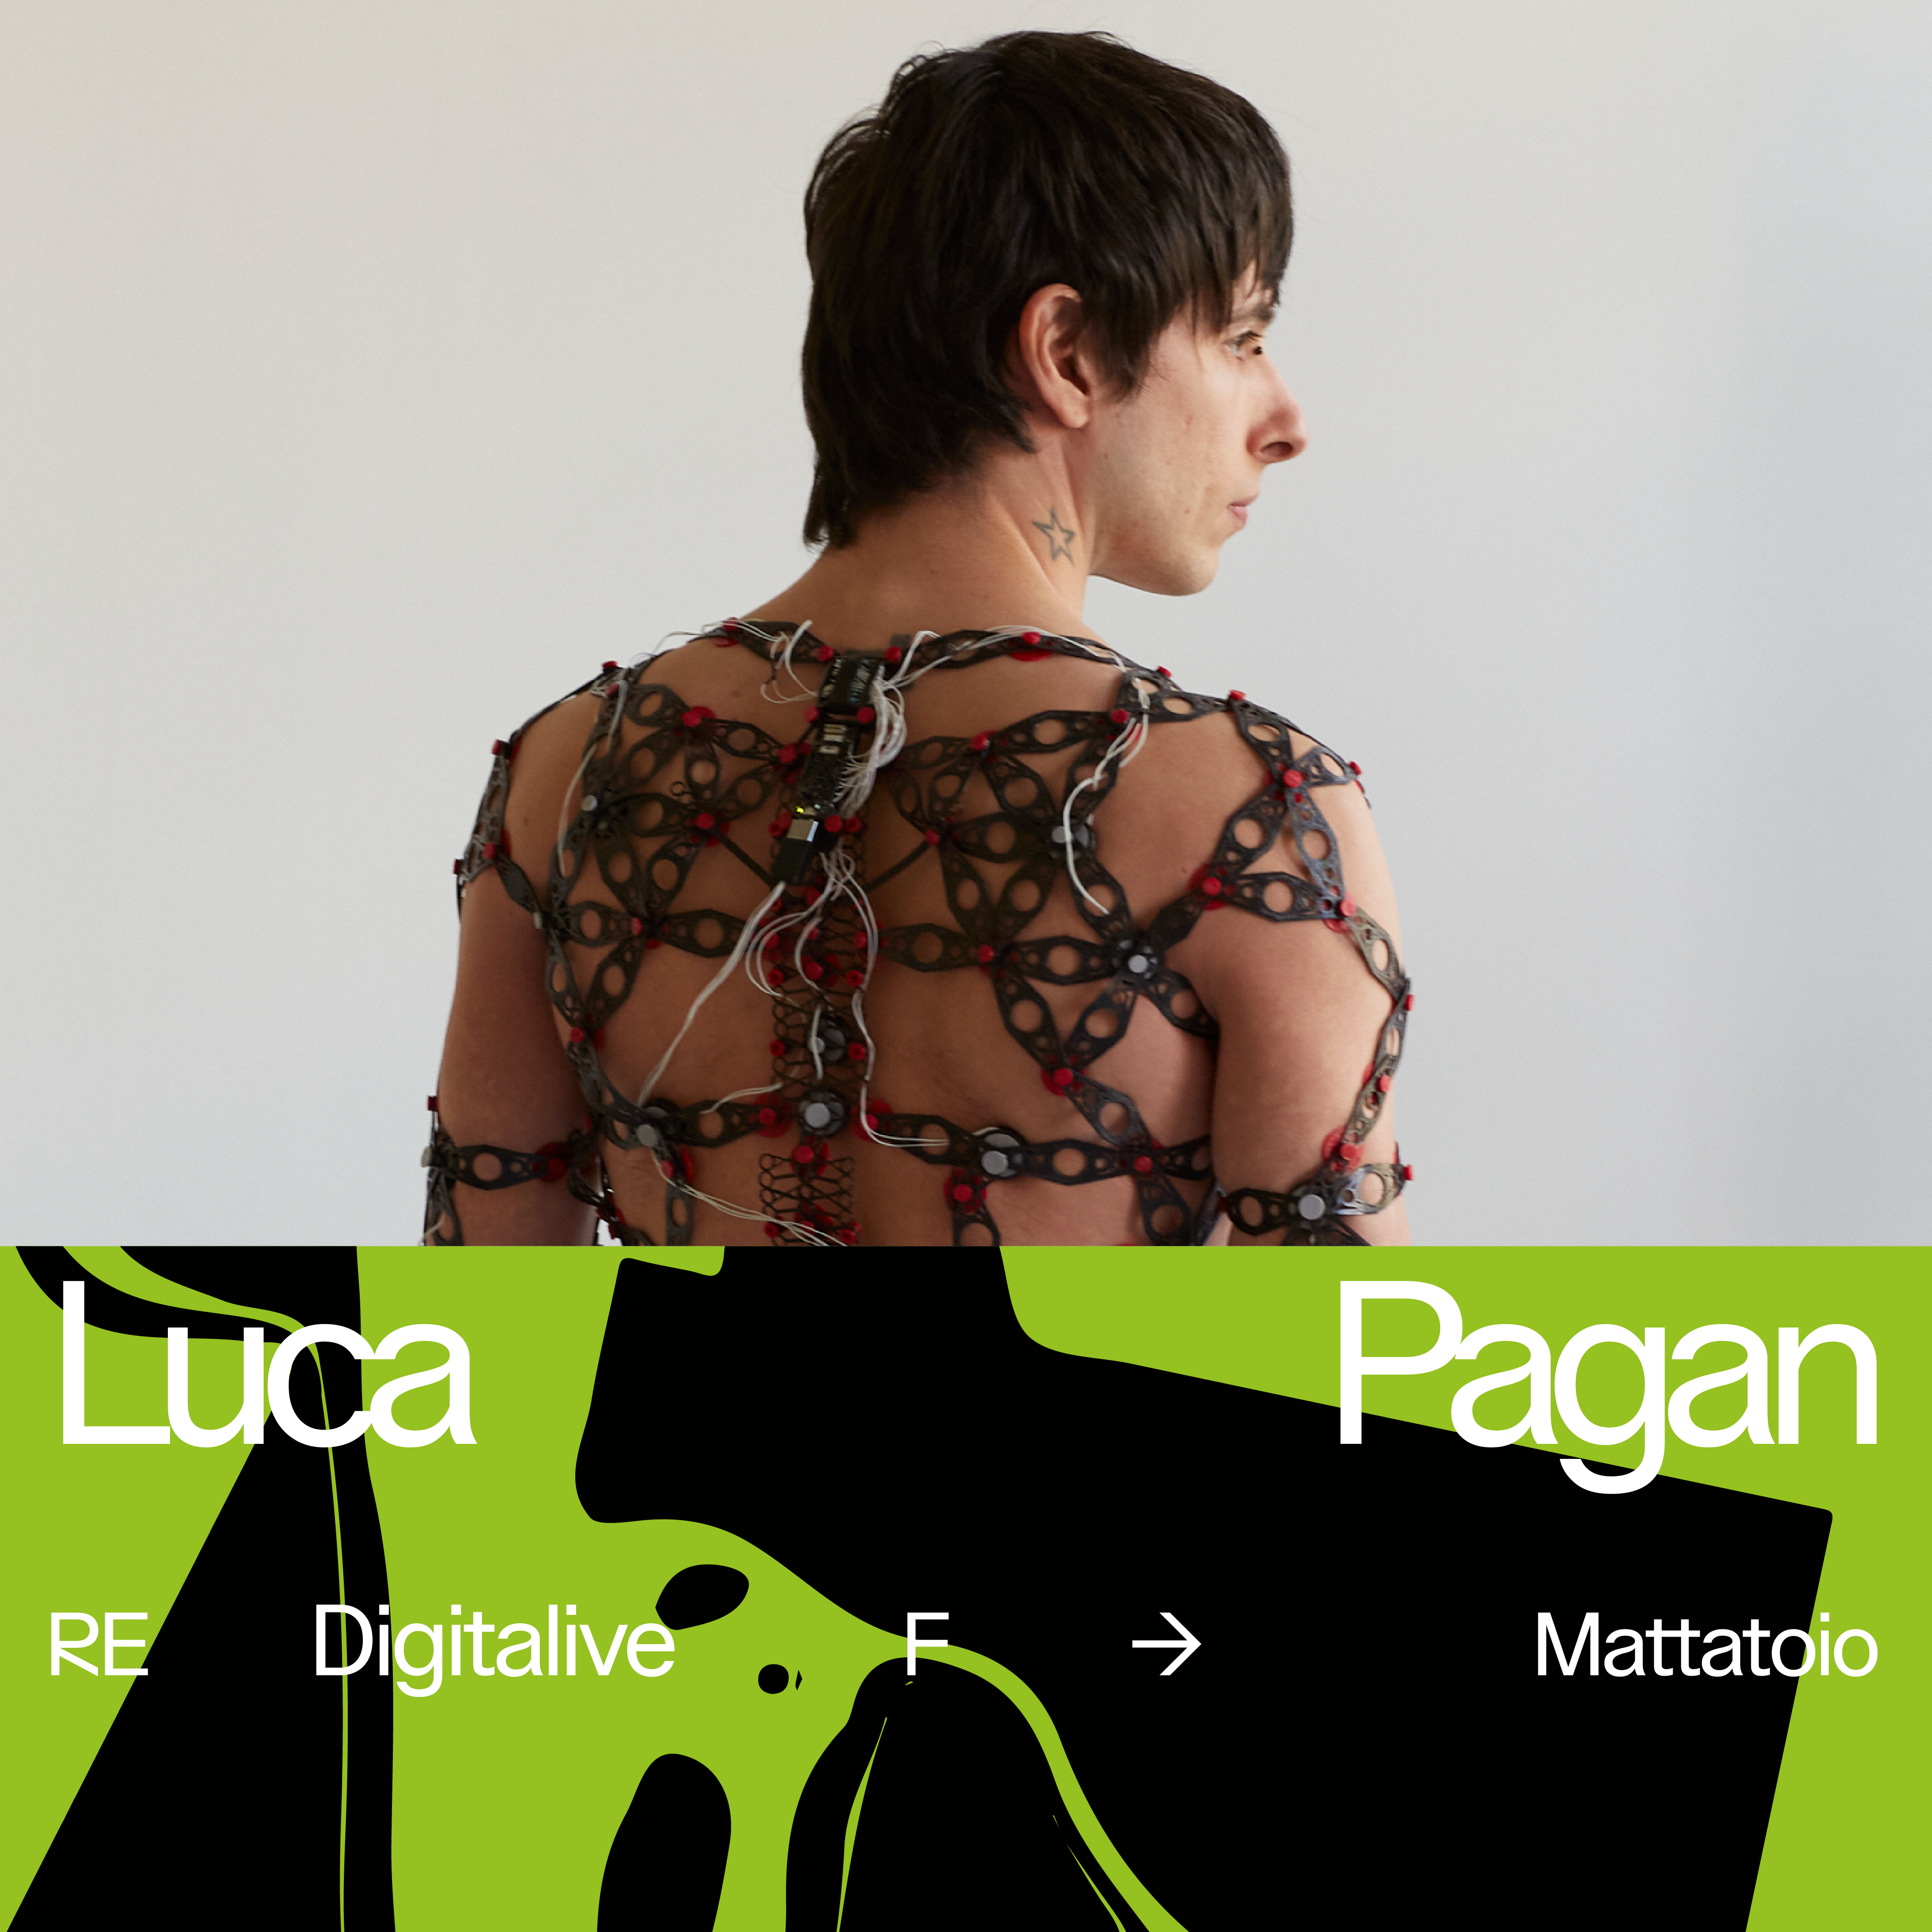 Luca Pagan Retraining Bodies